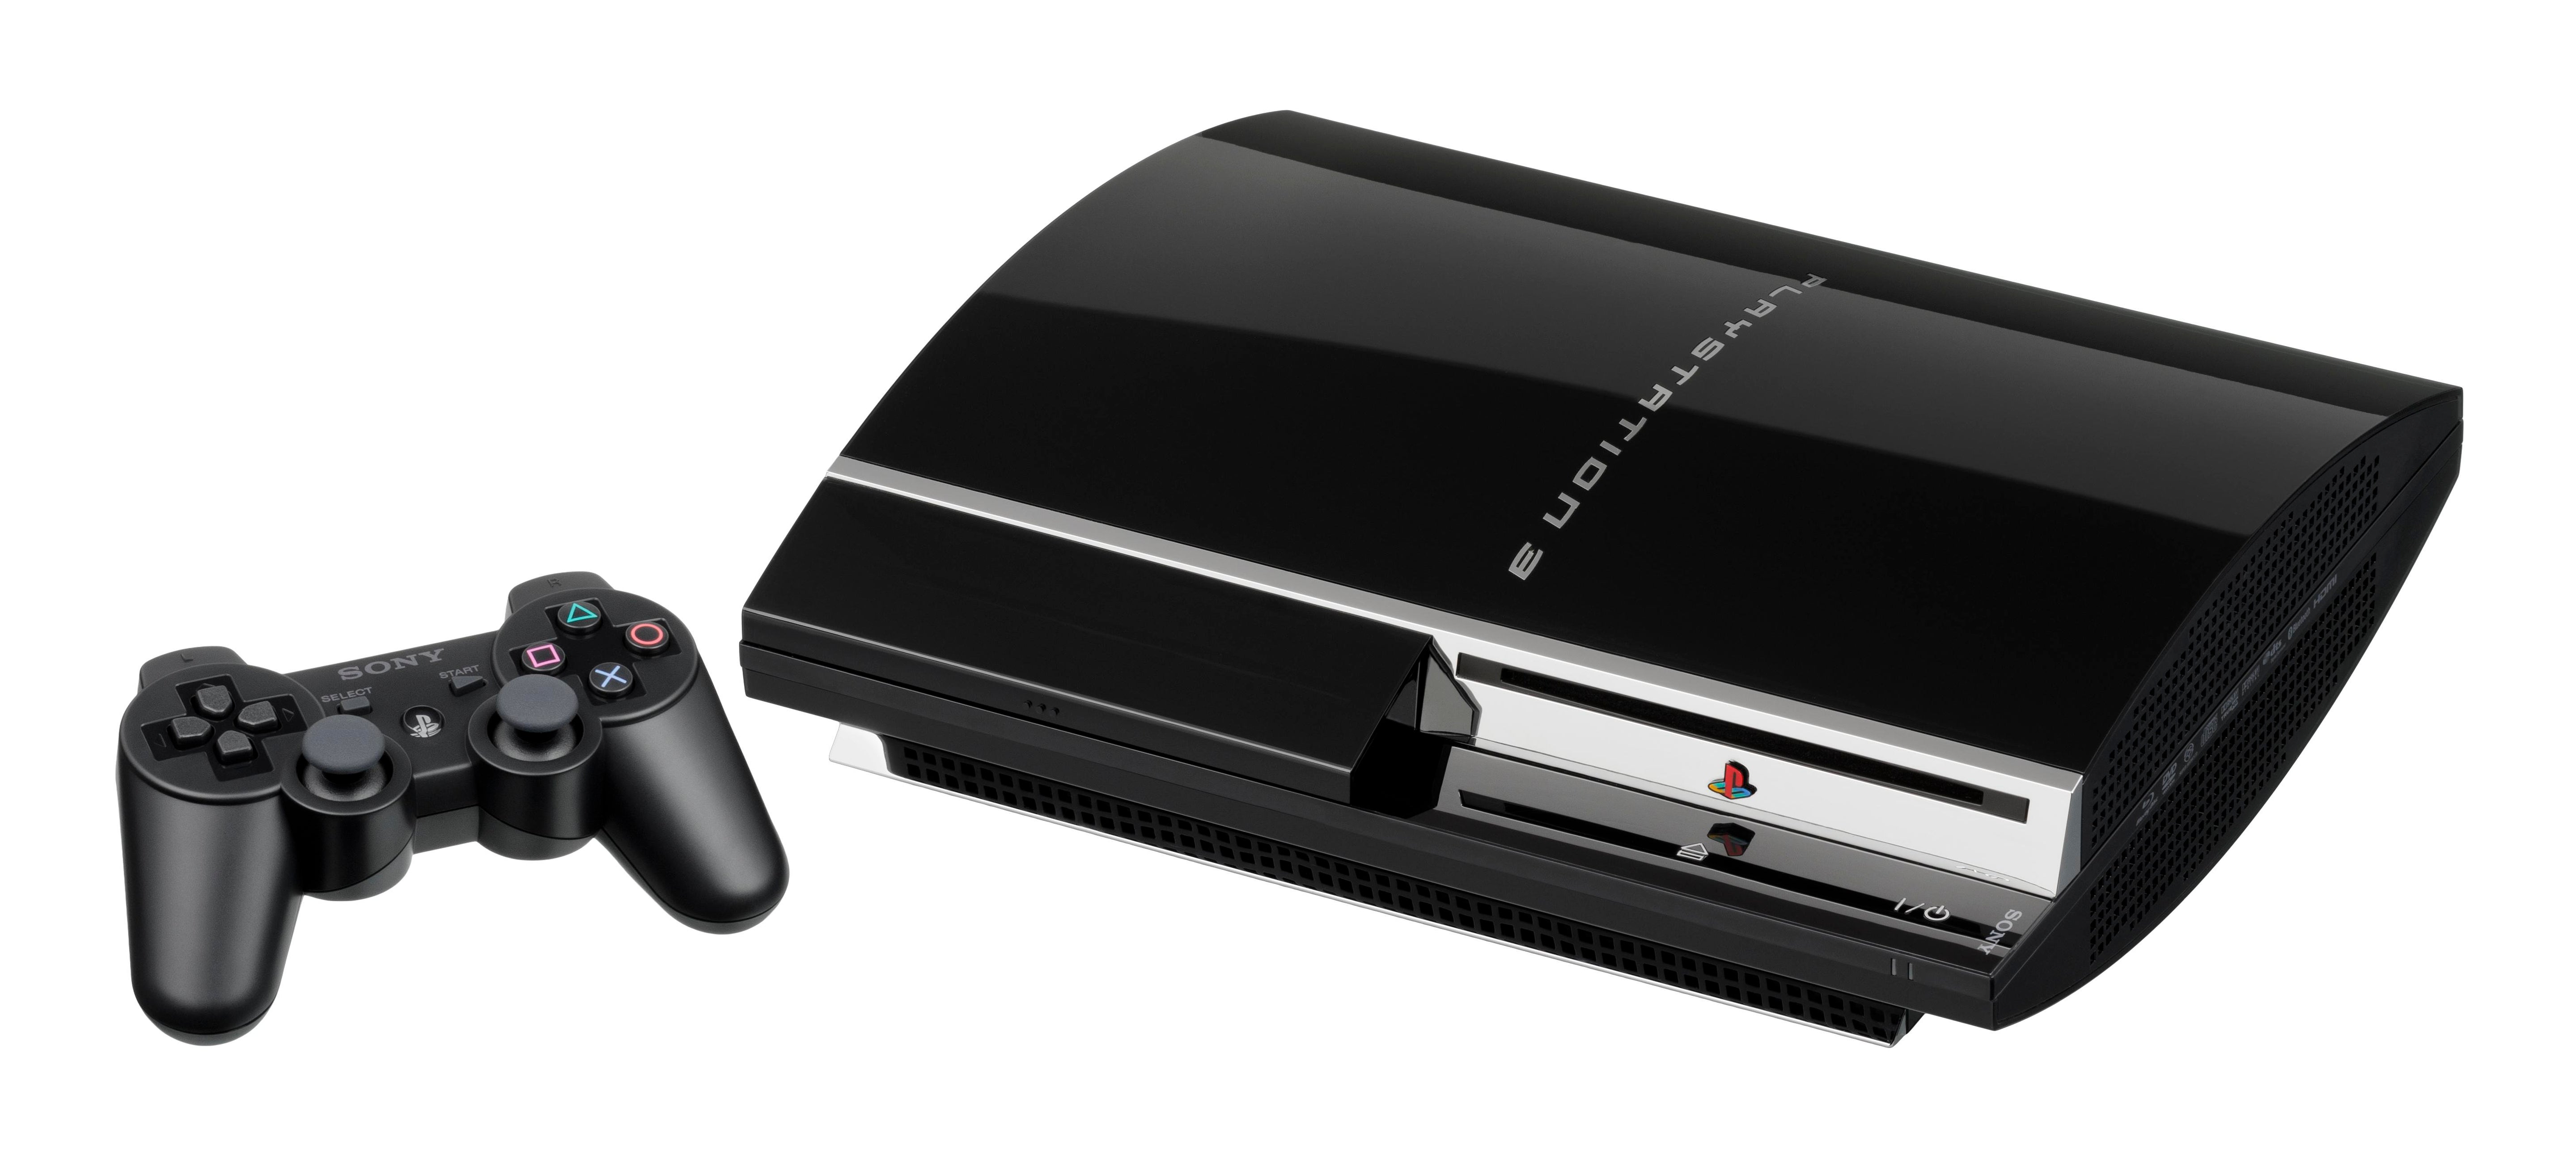 Playstation 3 Original Fat 20GB Console - Black [Backwards Compatible] CECHB01